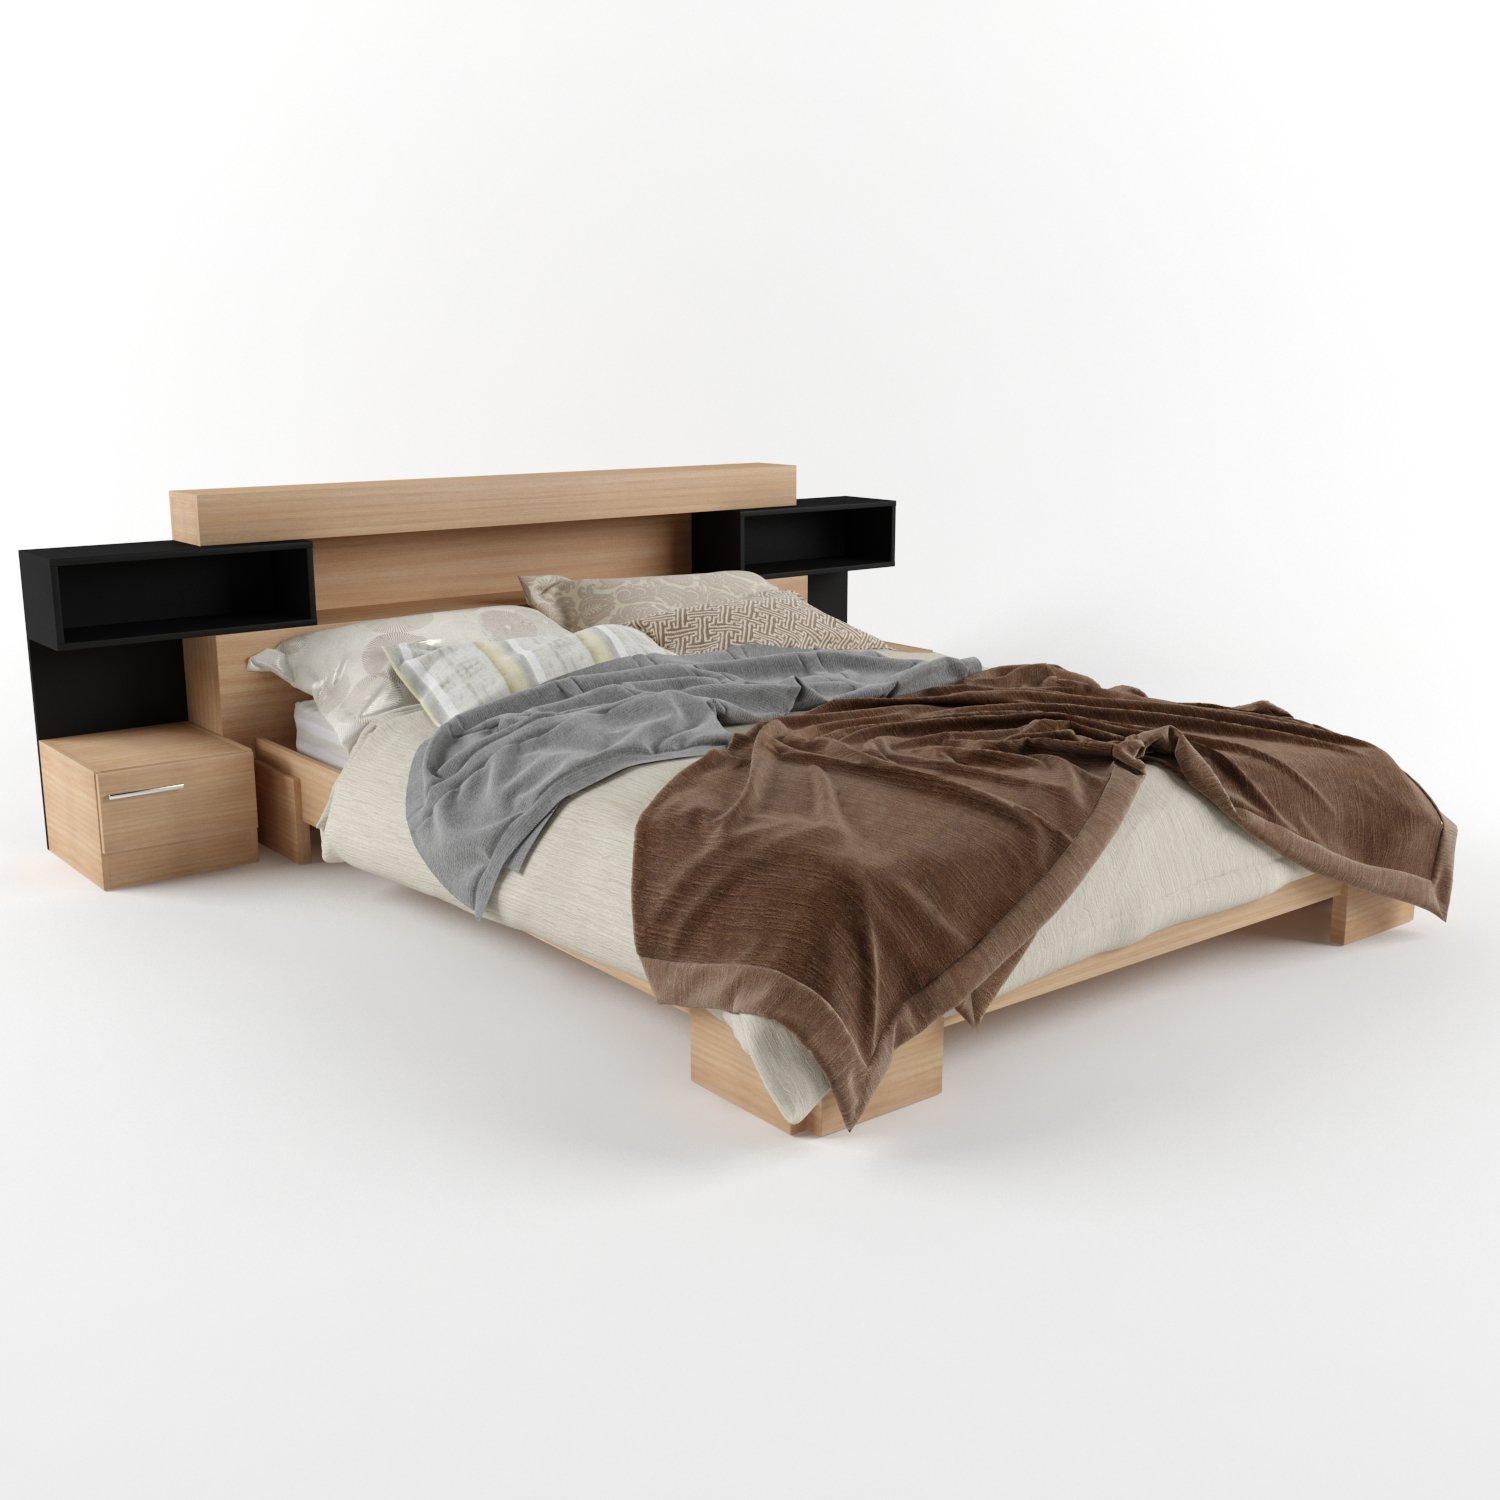 Saye Bed Furniture porsche design Free model - 3DArt